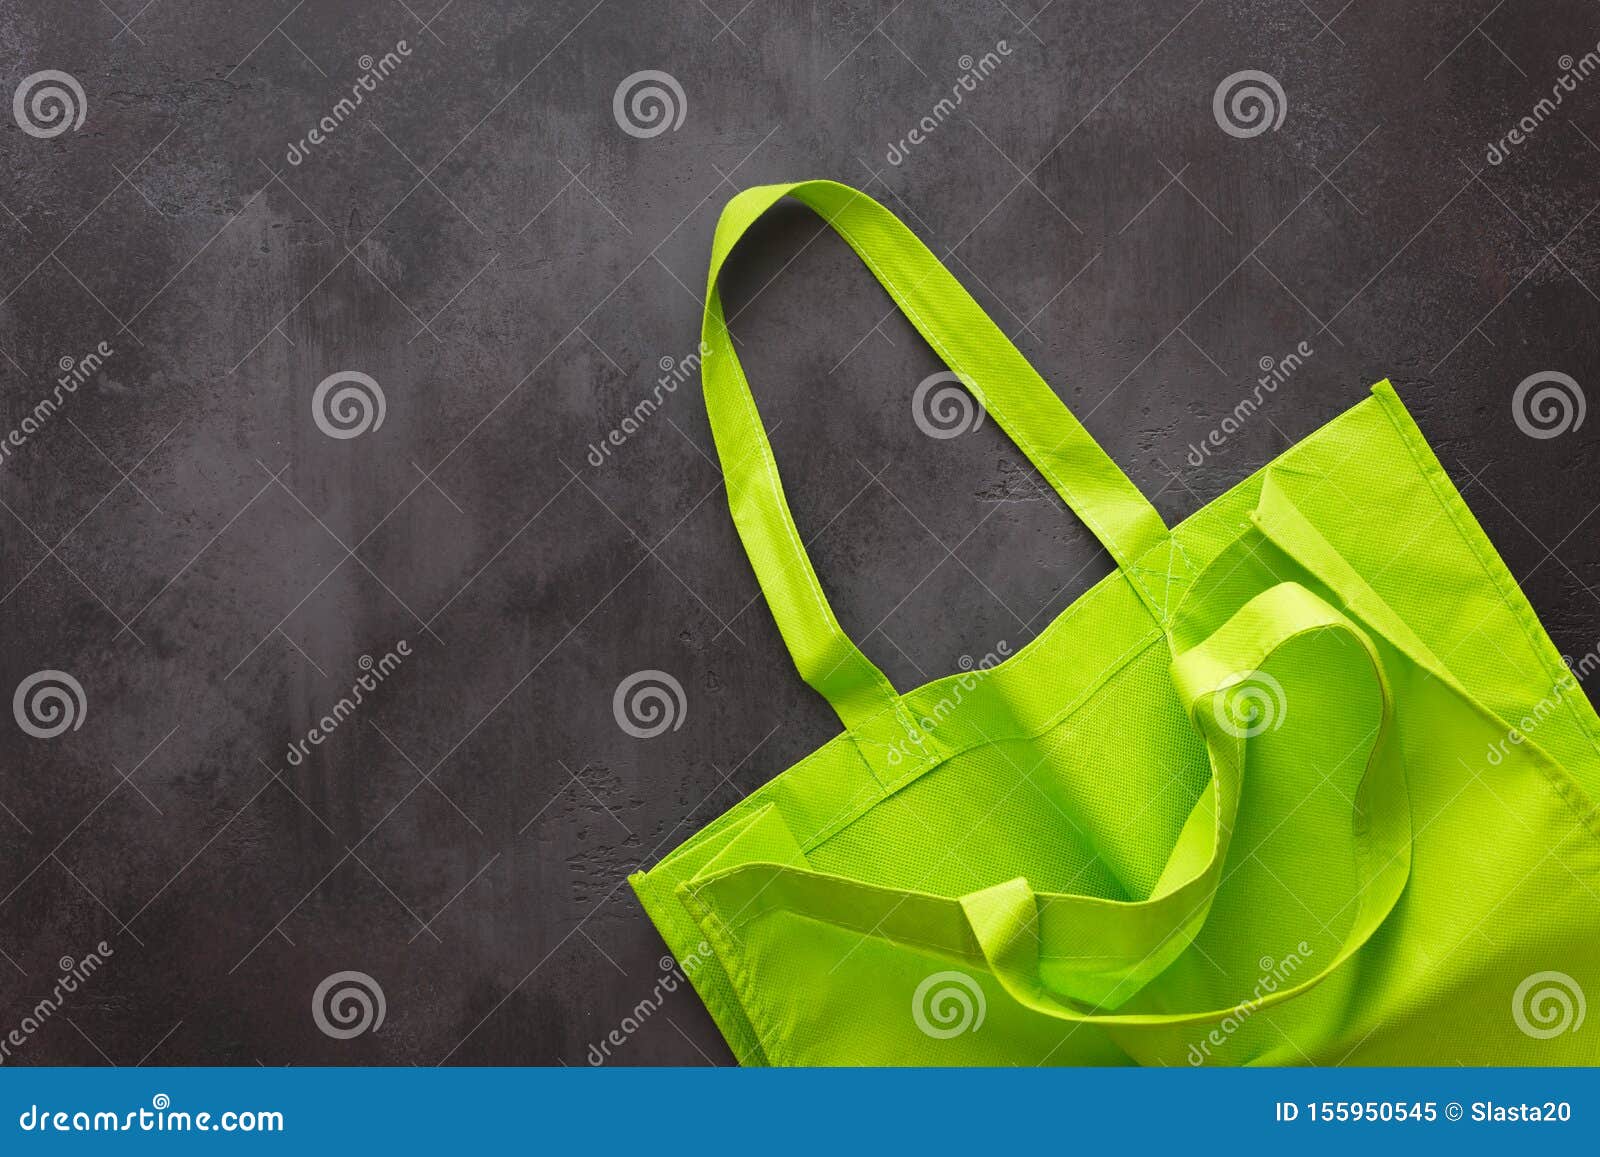 plain green cotton reusable tote bag